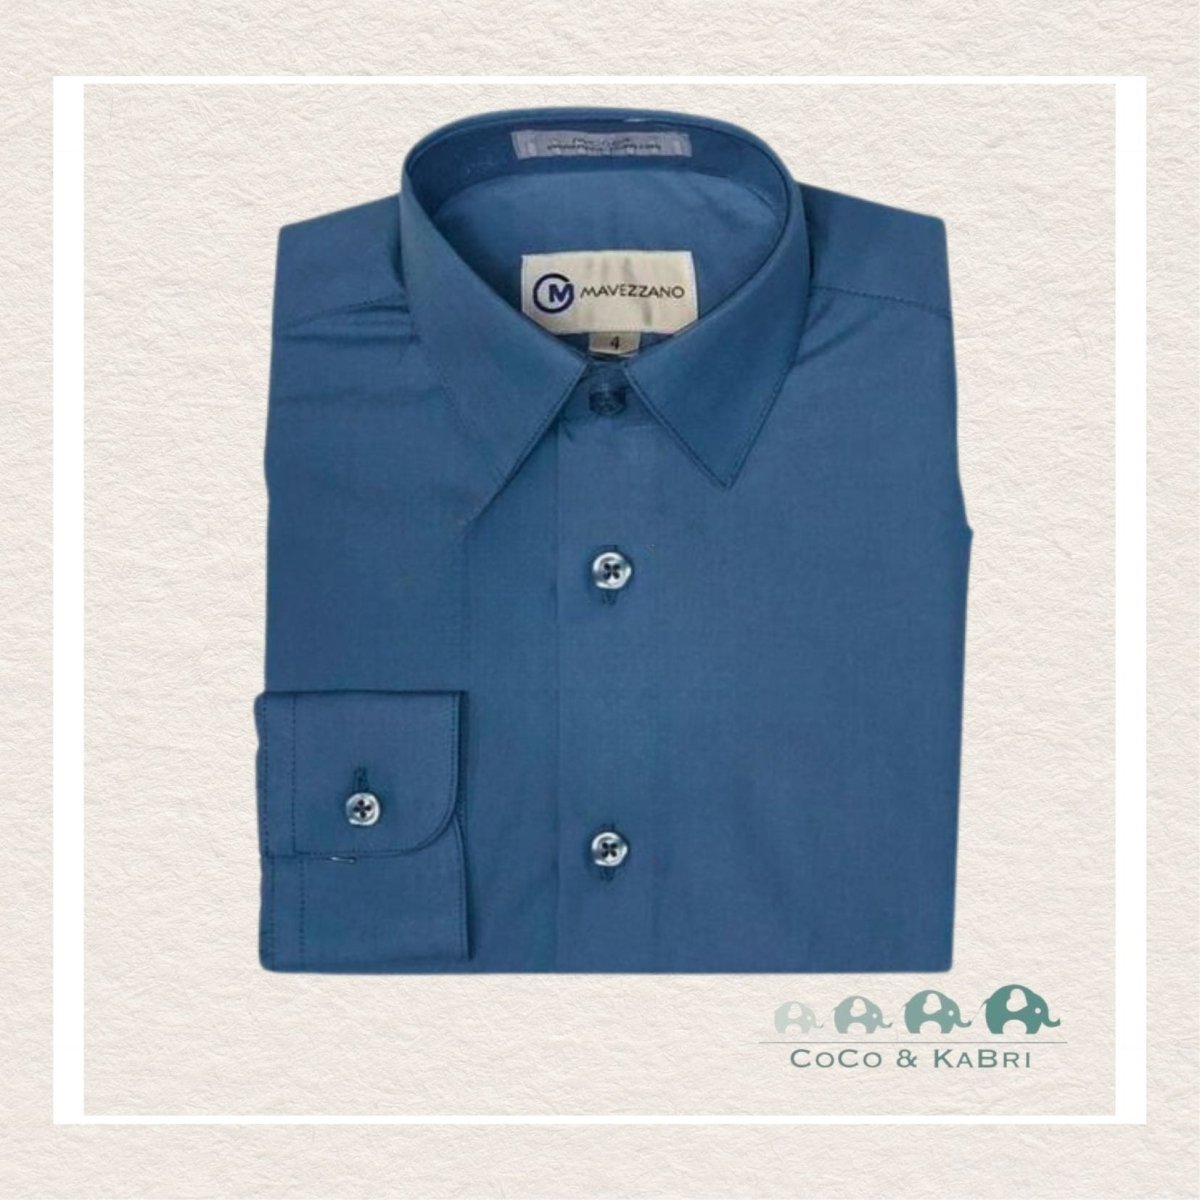 Mavezzano: Slate Blue Dress Shirt, Dress Shirt, CoCo & KaBri, Children's Boutique